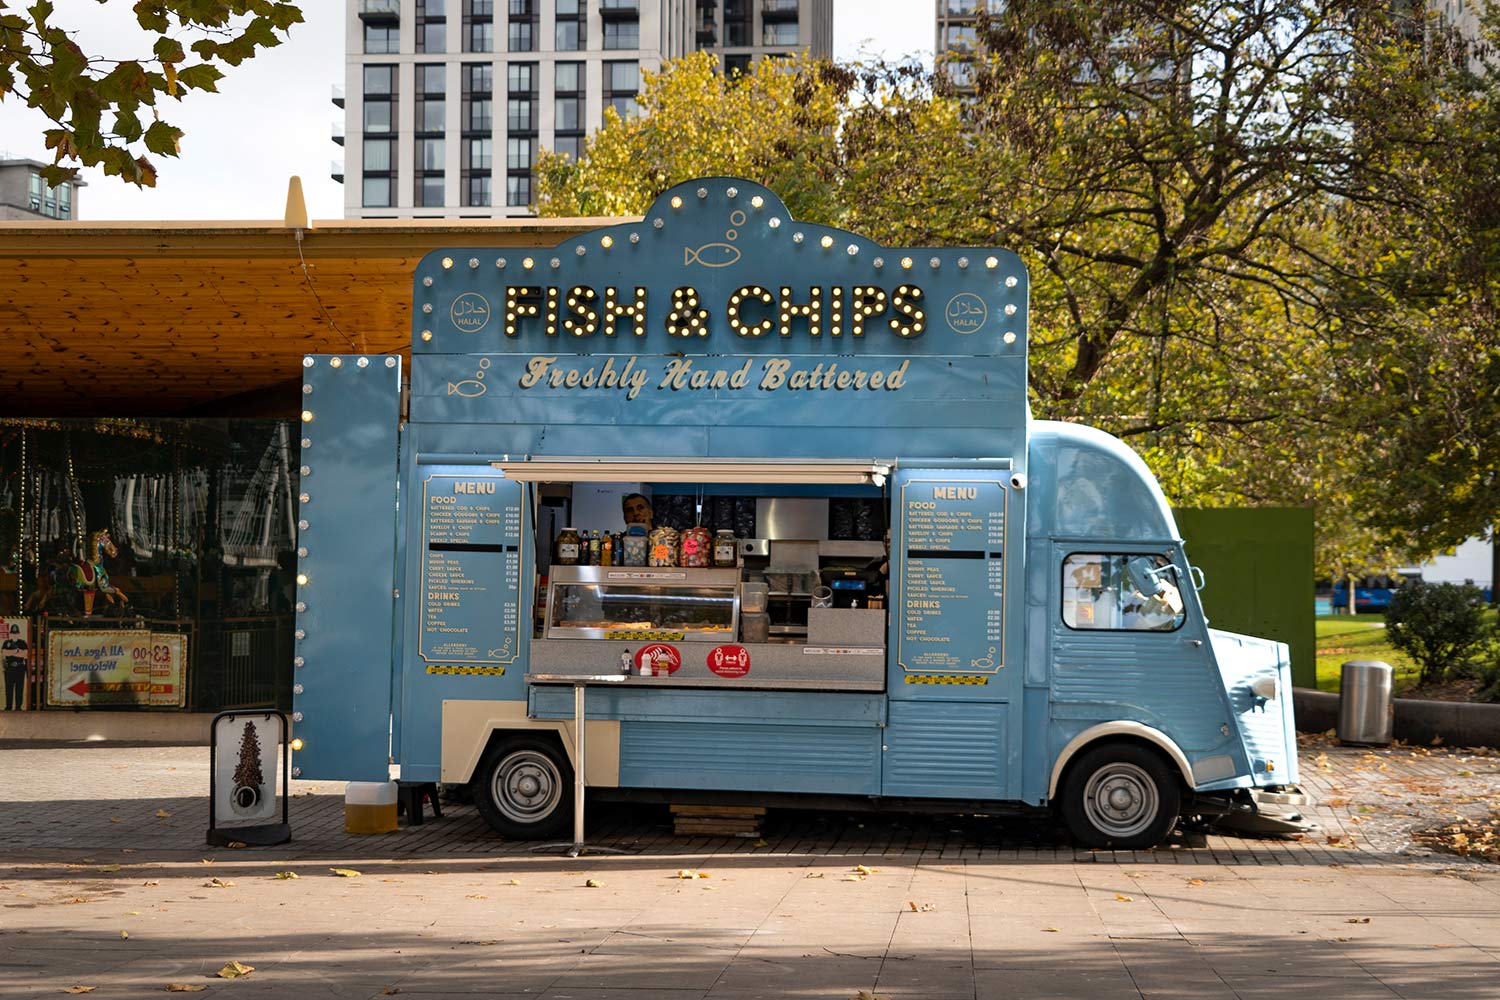 Fish & Chips, Londres, Angleterre, Royaume-Unis / Fish & Chips, London, England, UK